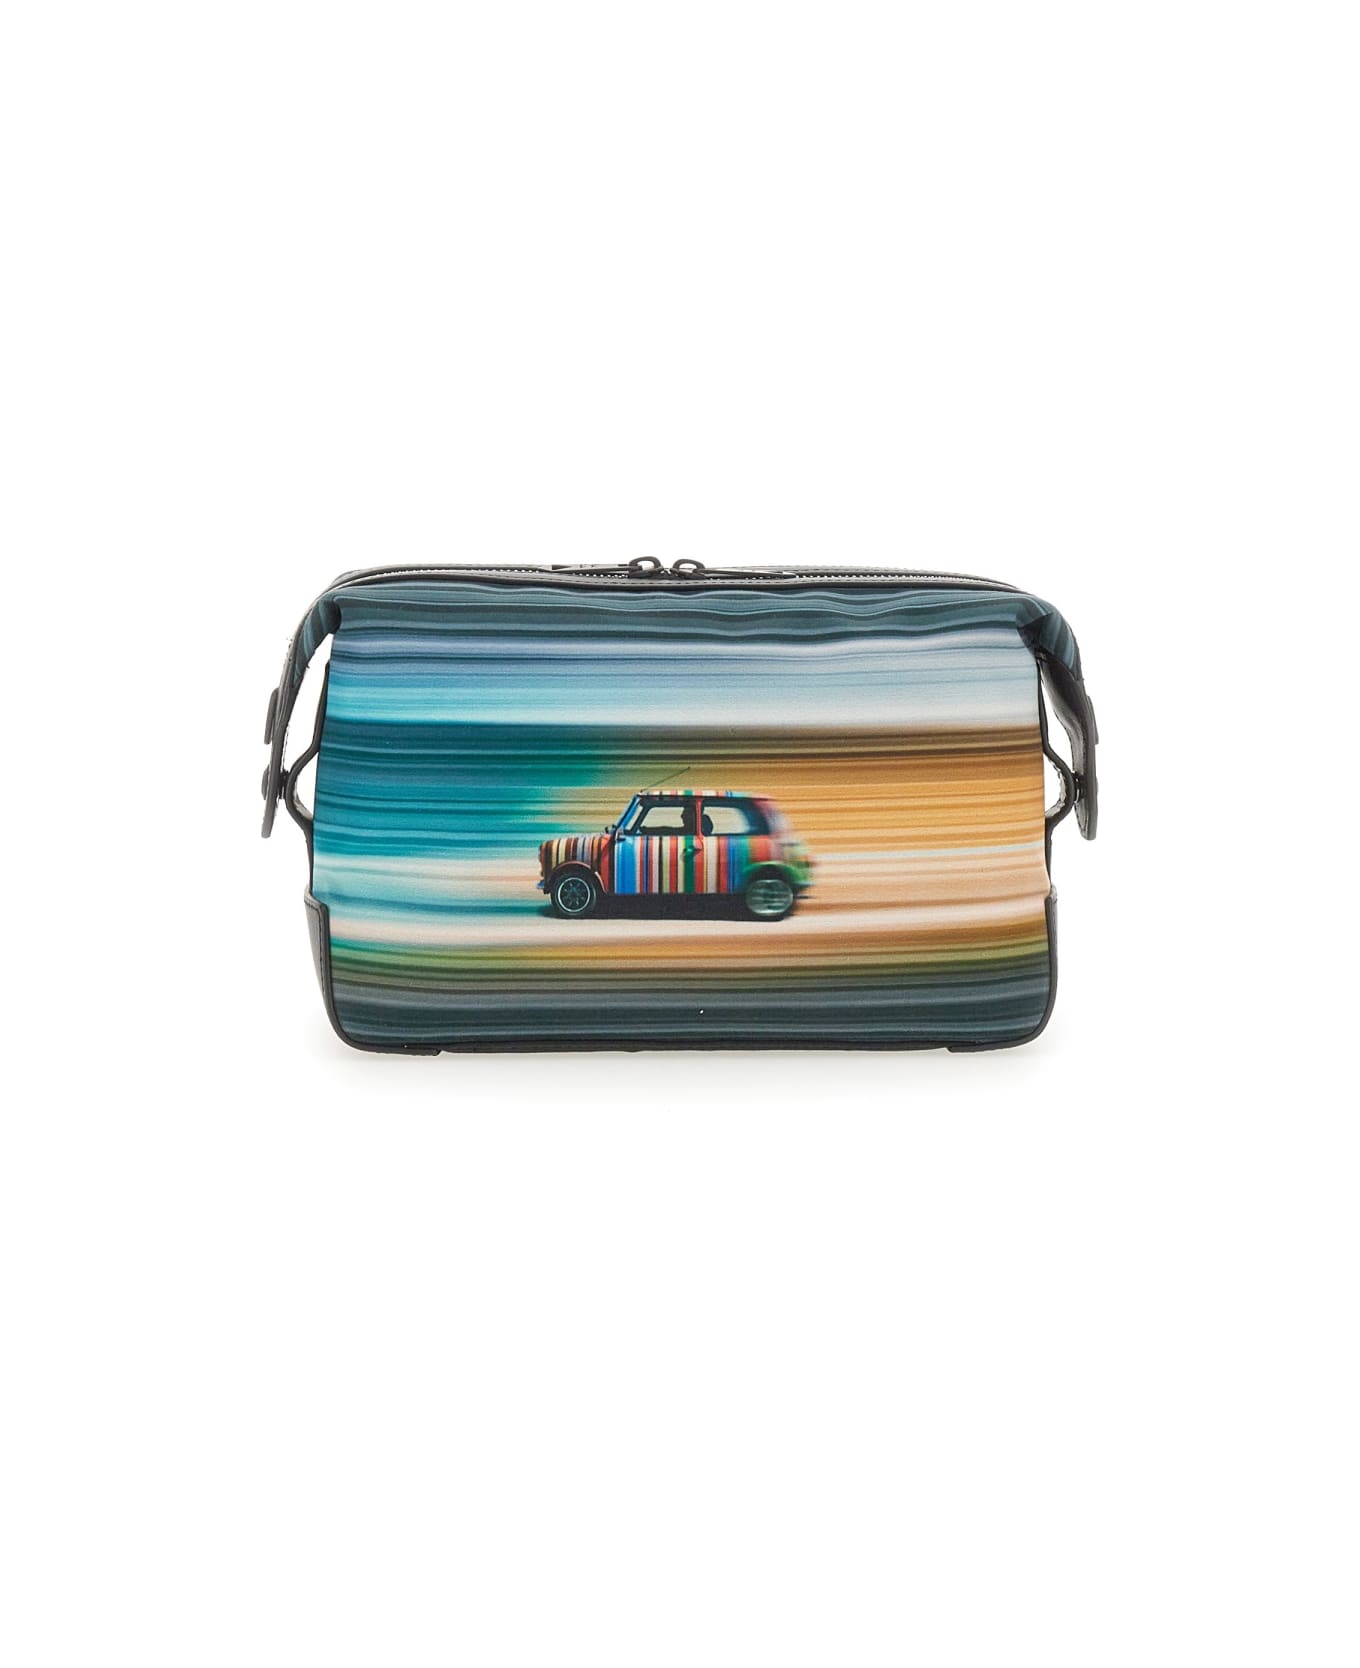 Paul Smith 'mini Blur' Travel Clutch Bag - PRINTED